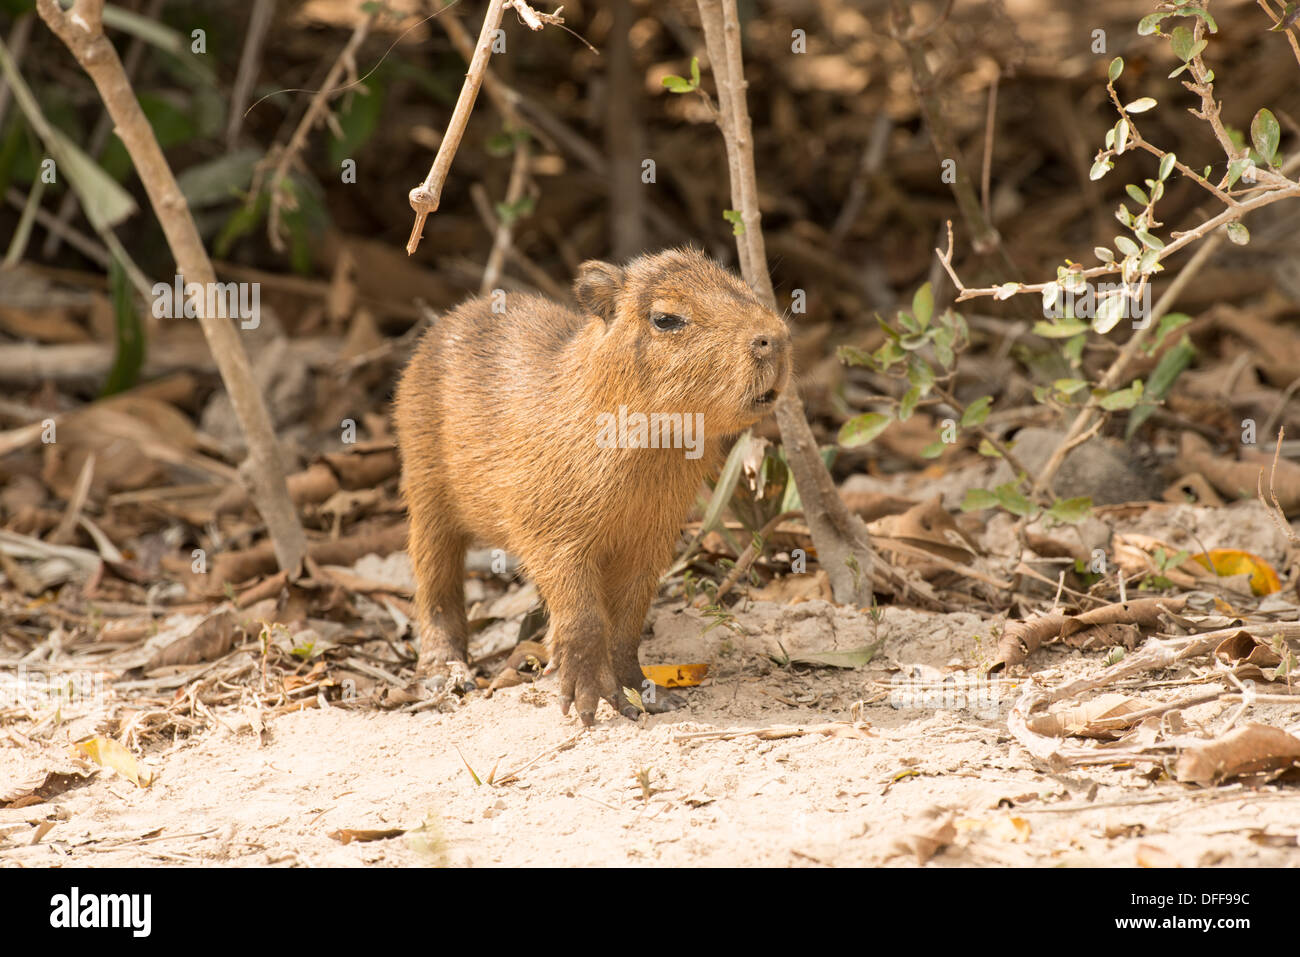 Stock Foto von einem Baby Capybara, Pantanal, Brasilien. Stockfoto